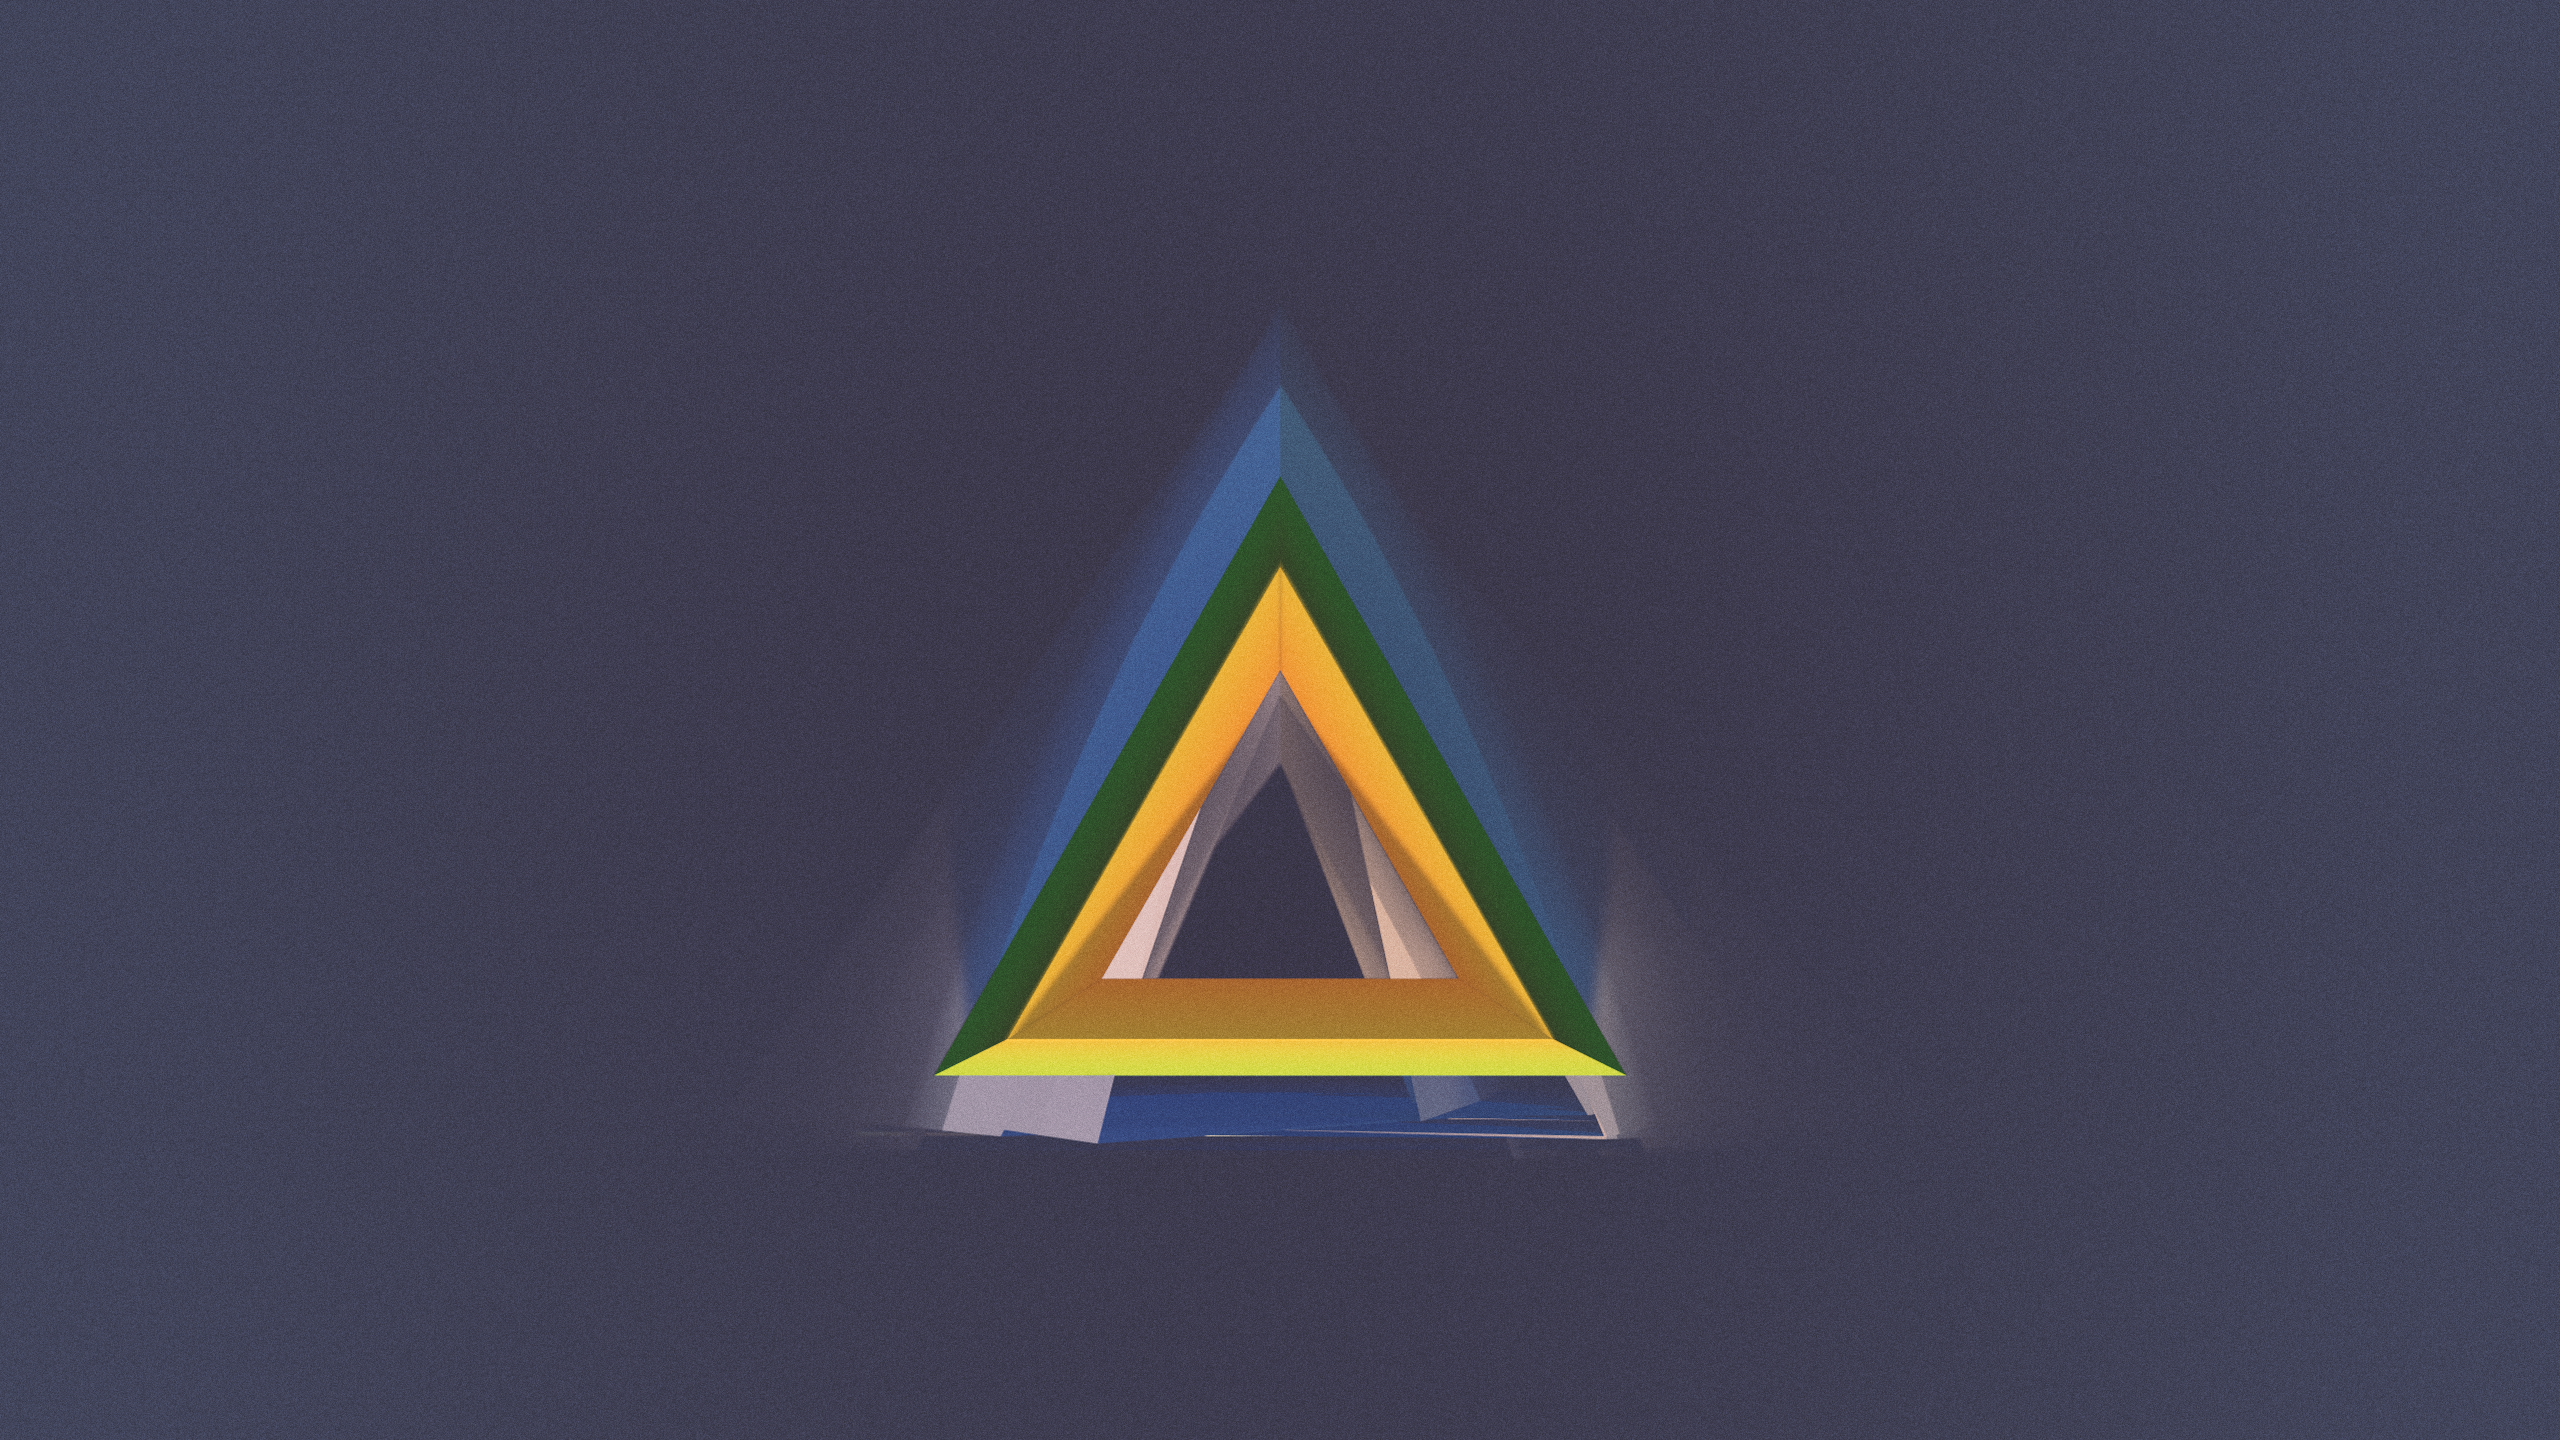 General 2560x1440 Cinema 4D digital art simple background abstract geometric figures triangle geometry